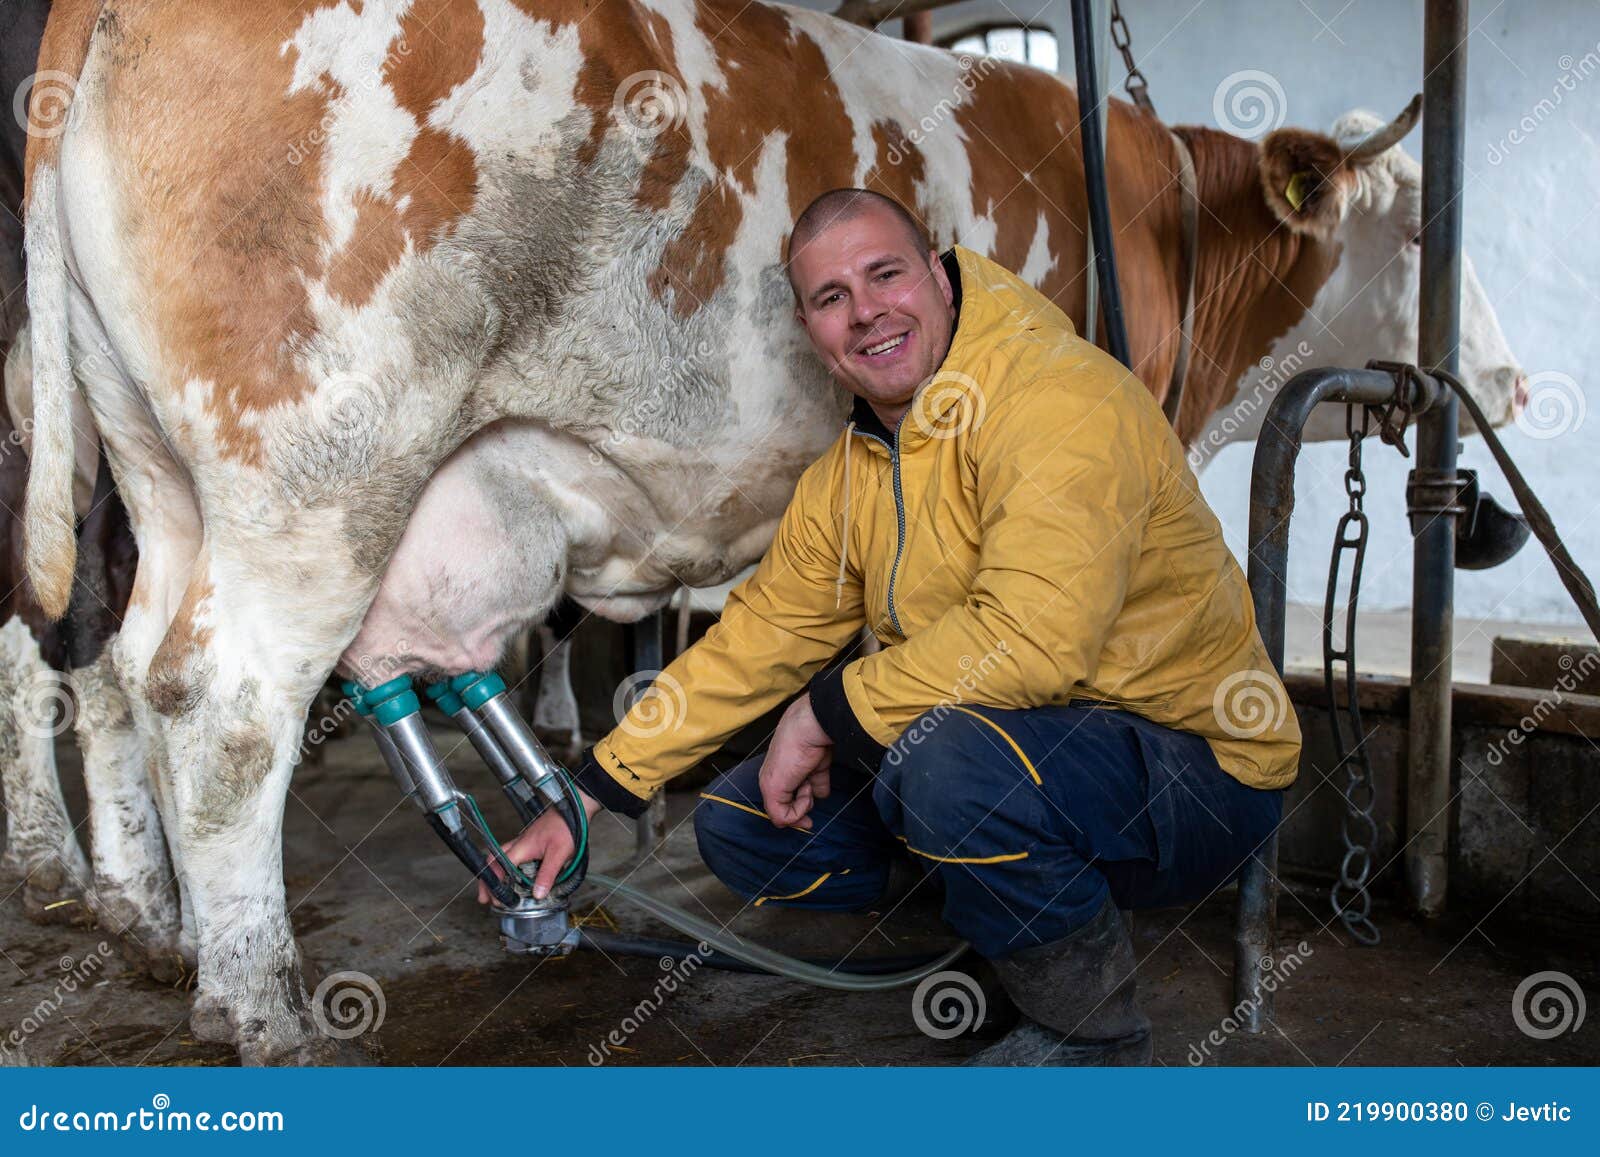 doug rines recommends Man Using Milking Machine